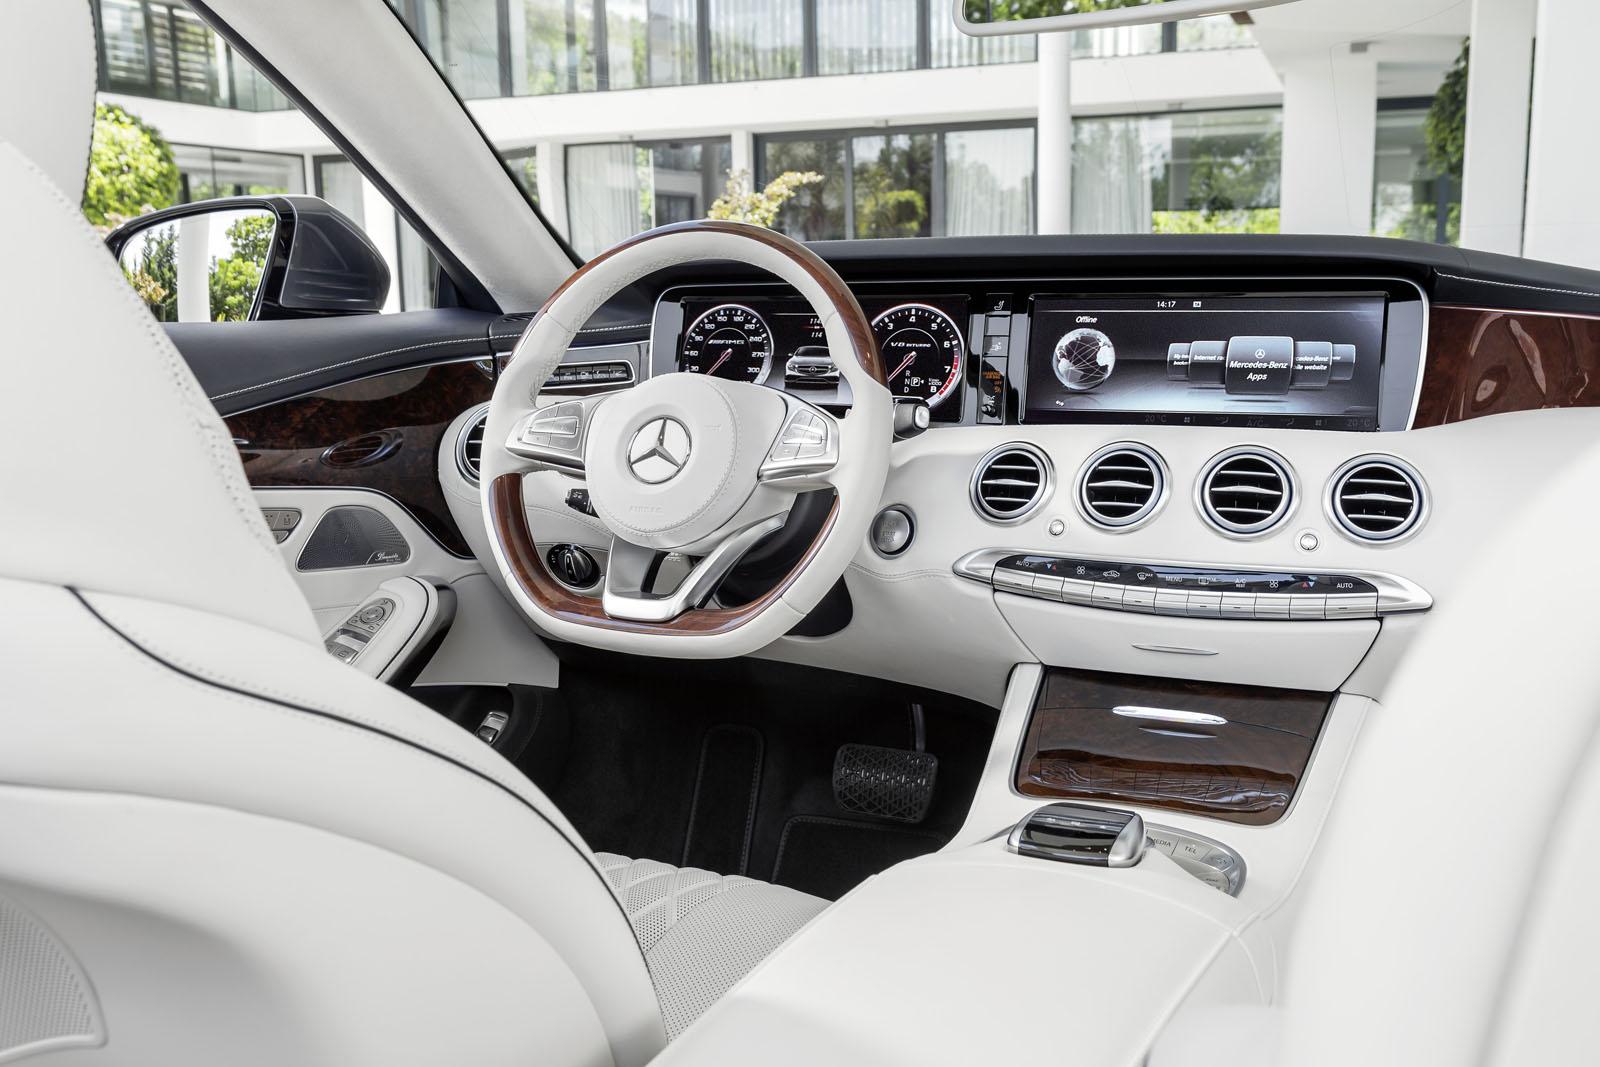 Mercedes Benz S Class Cabrio Unveiled Throttle Blips